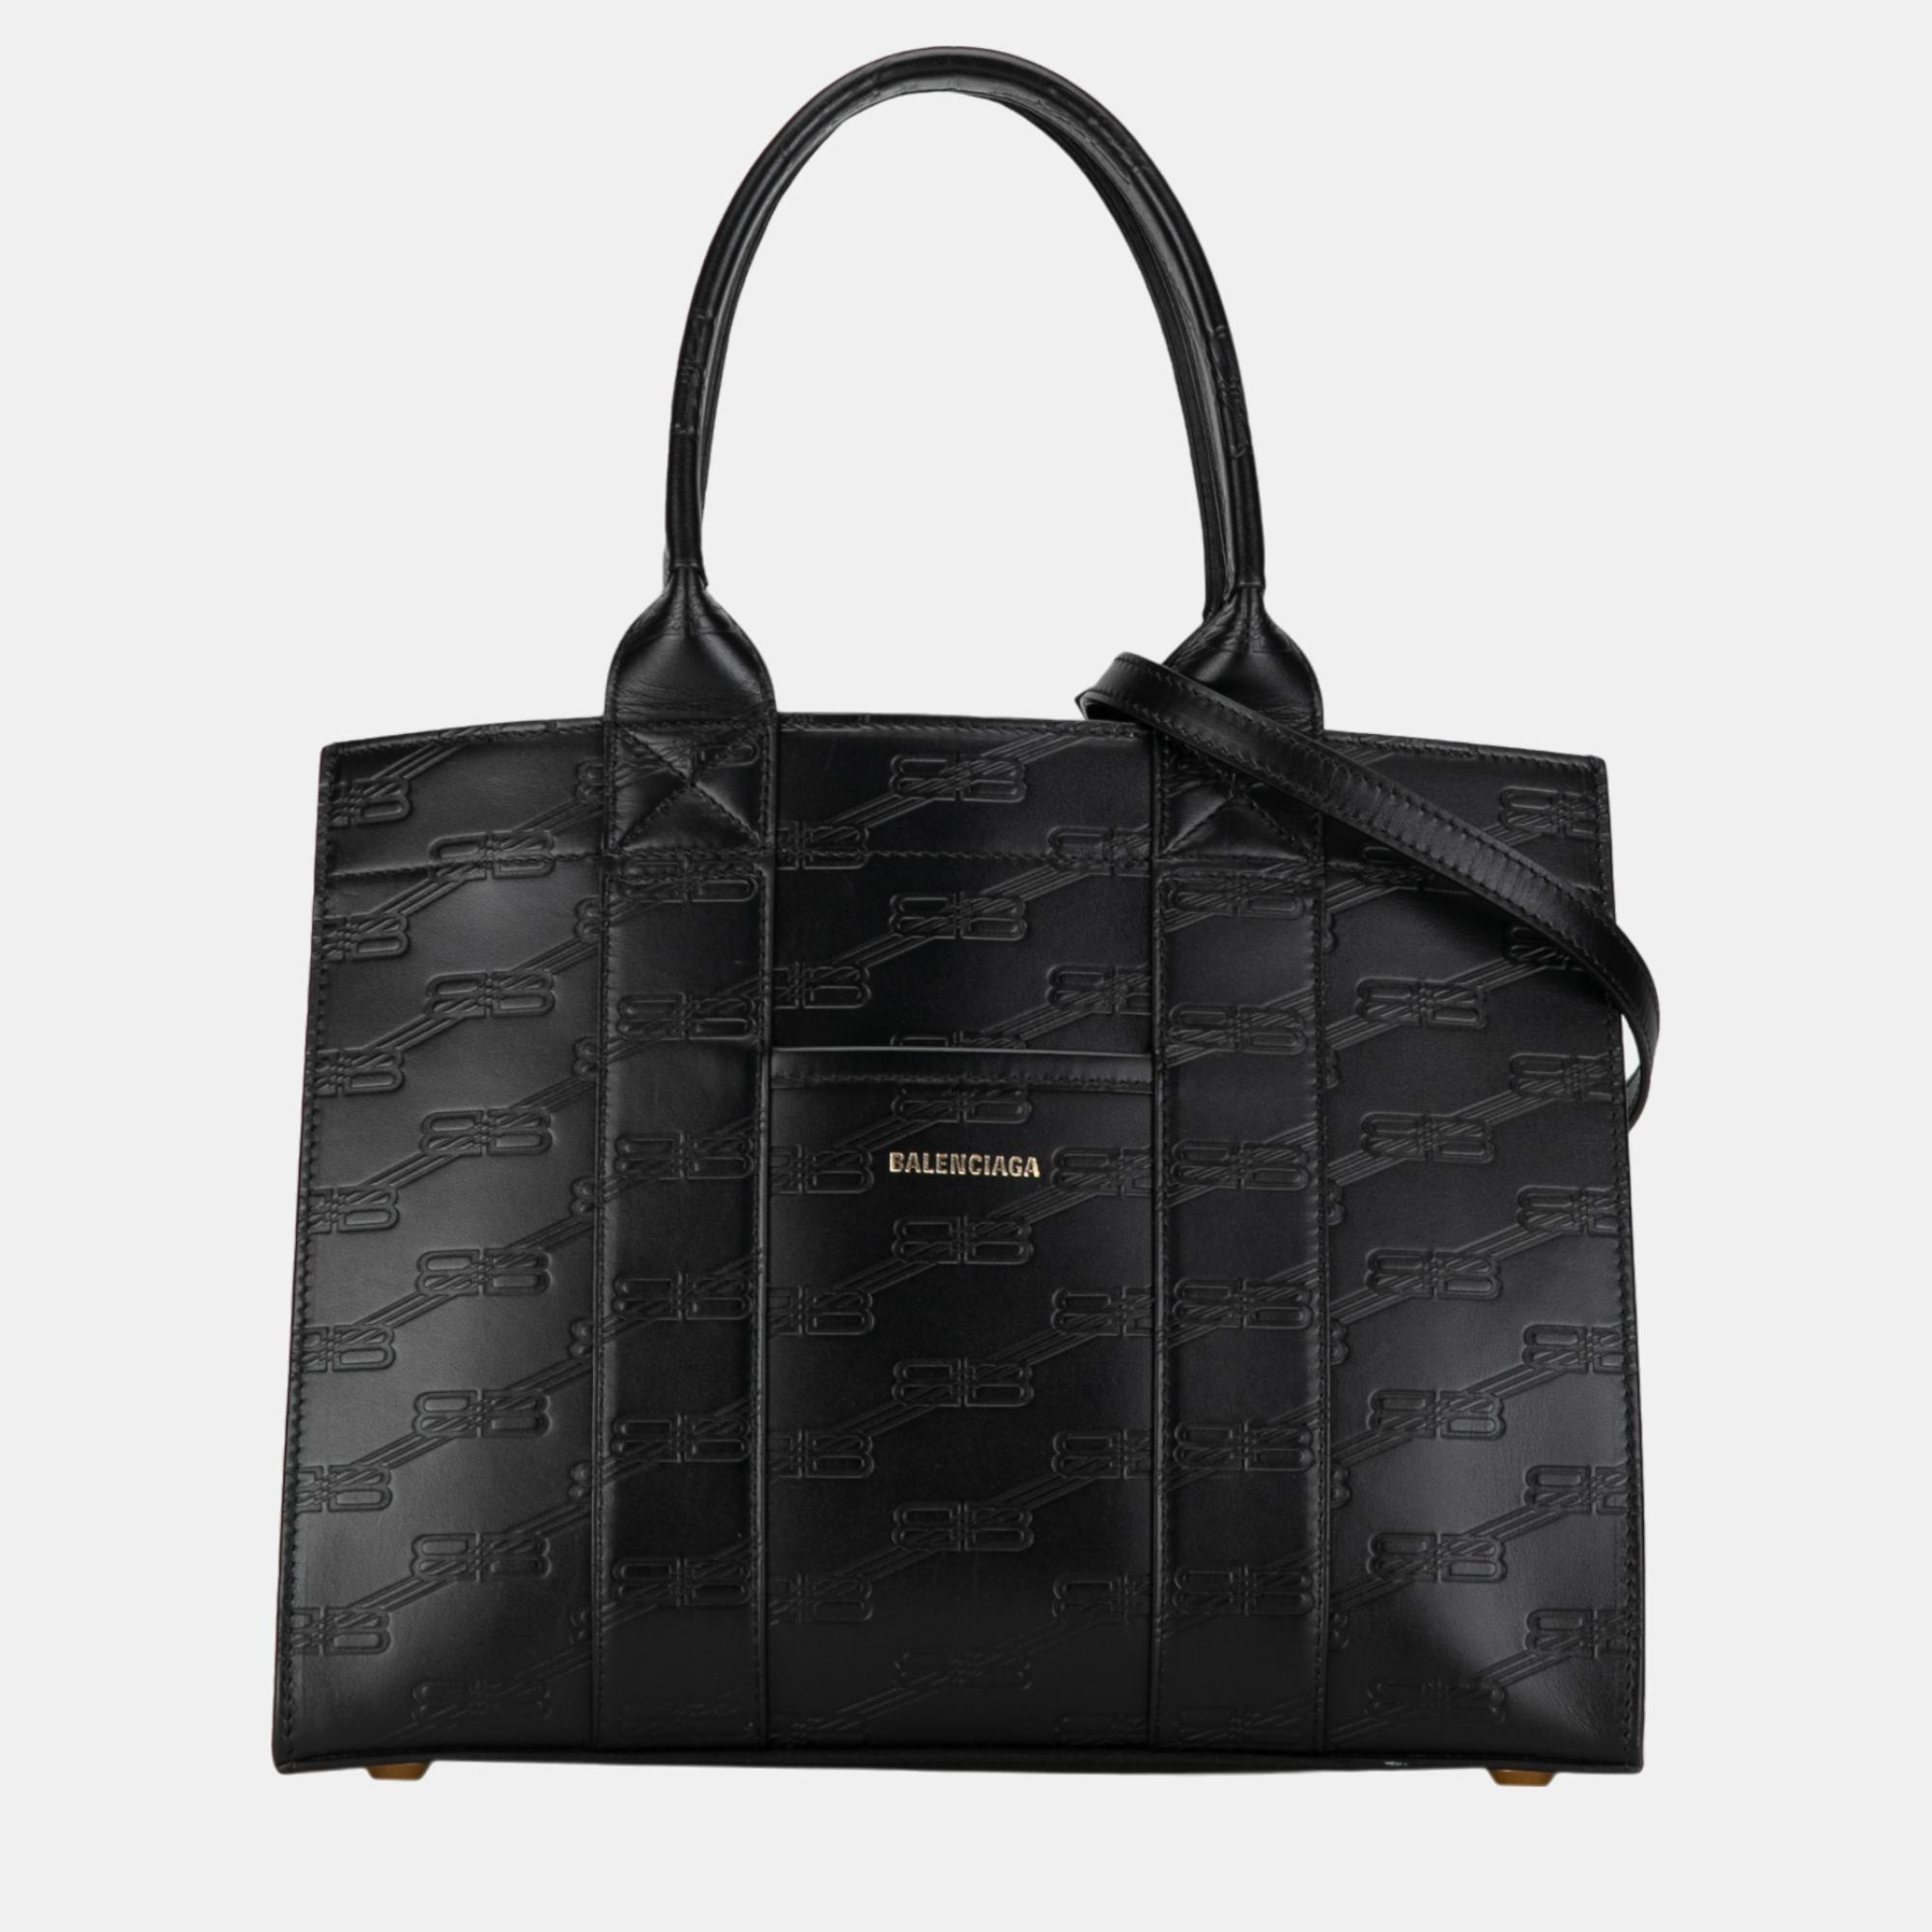 Balenciaga black bb monogram leather satchel